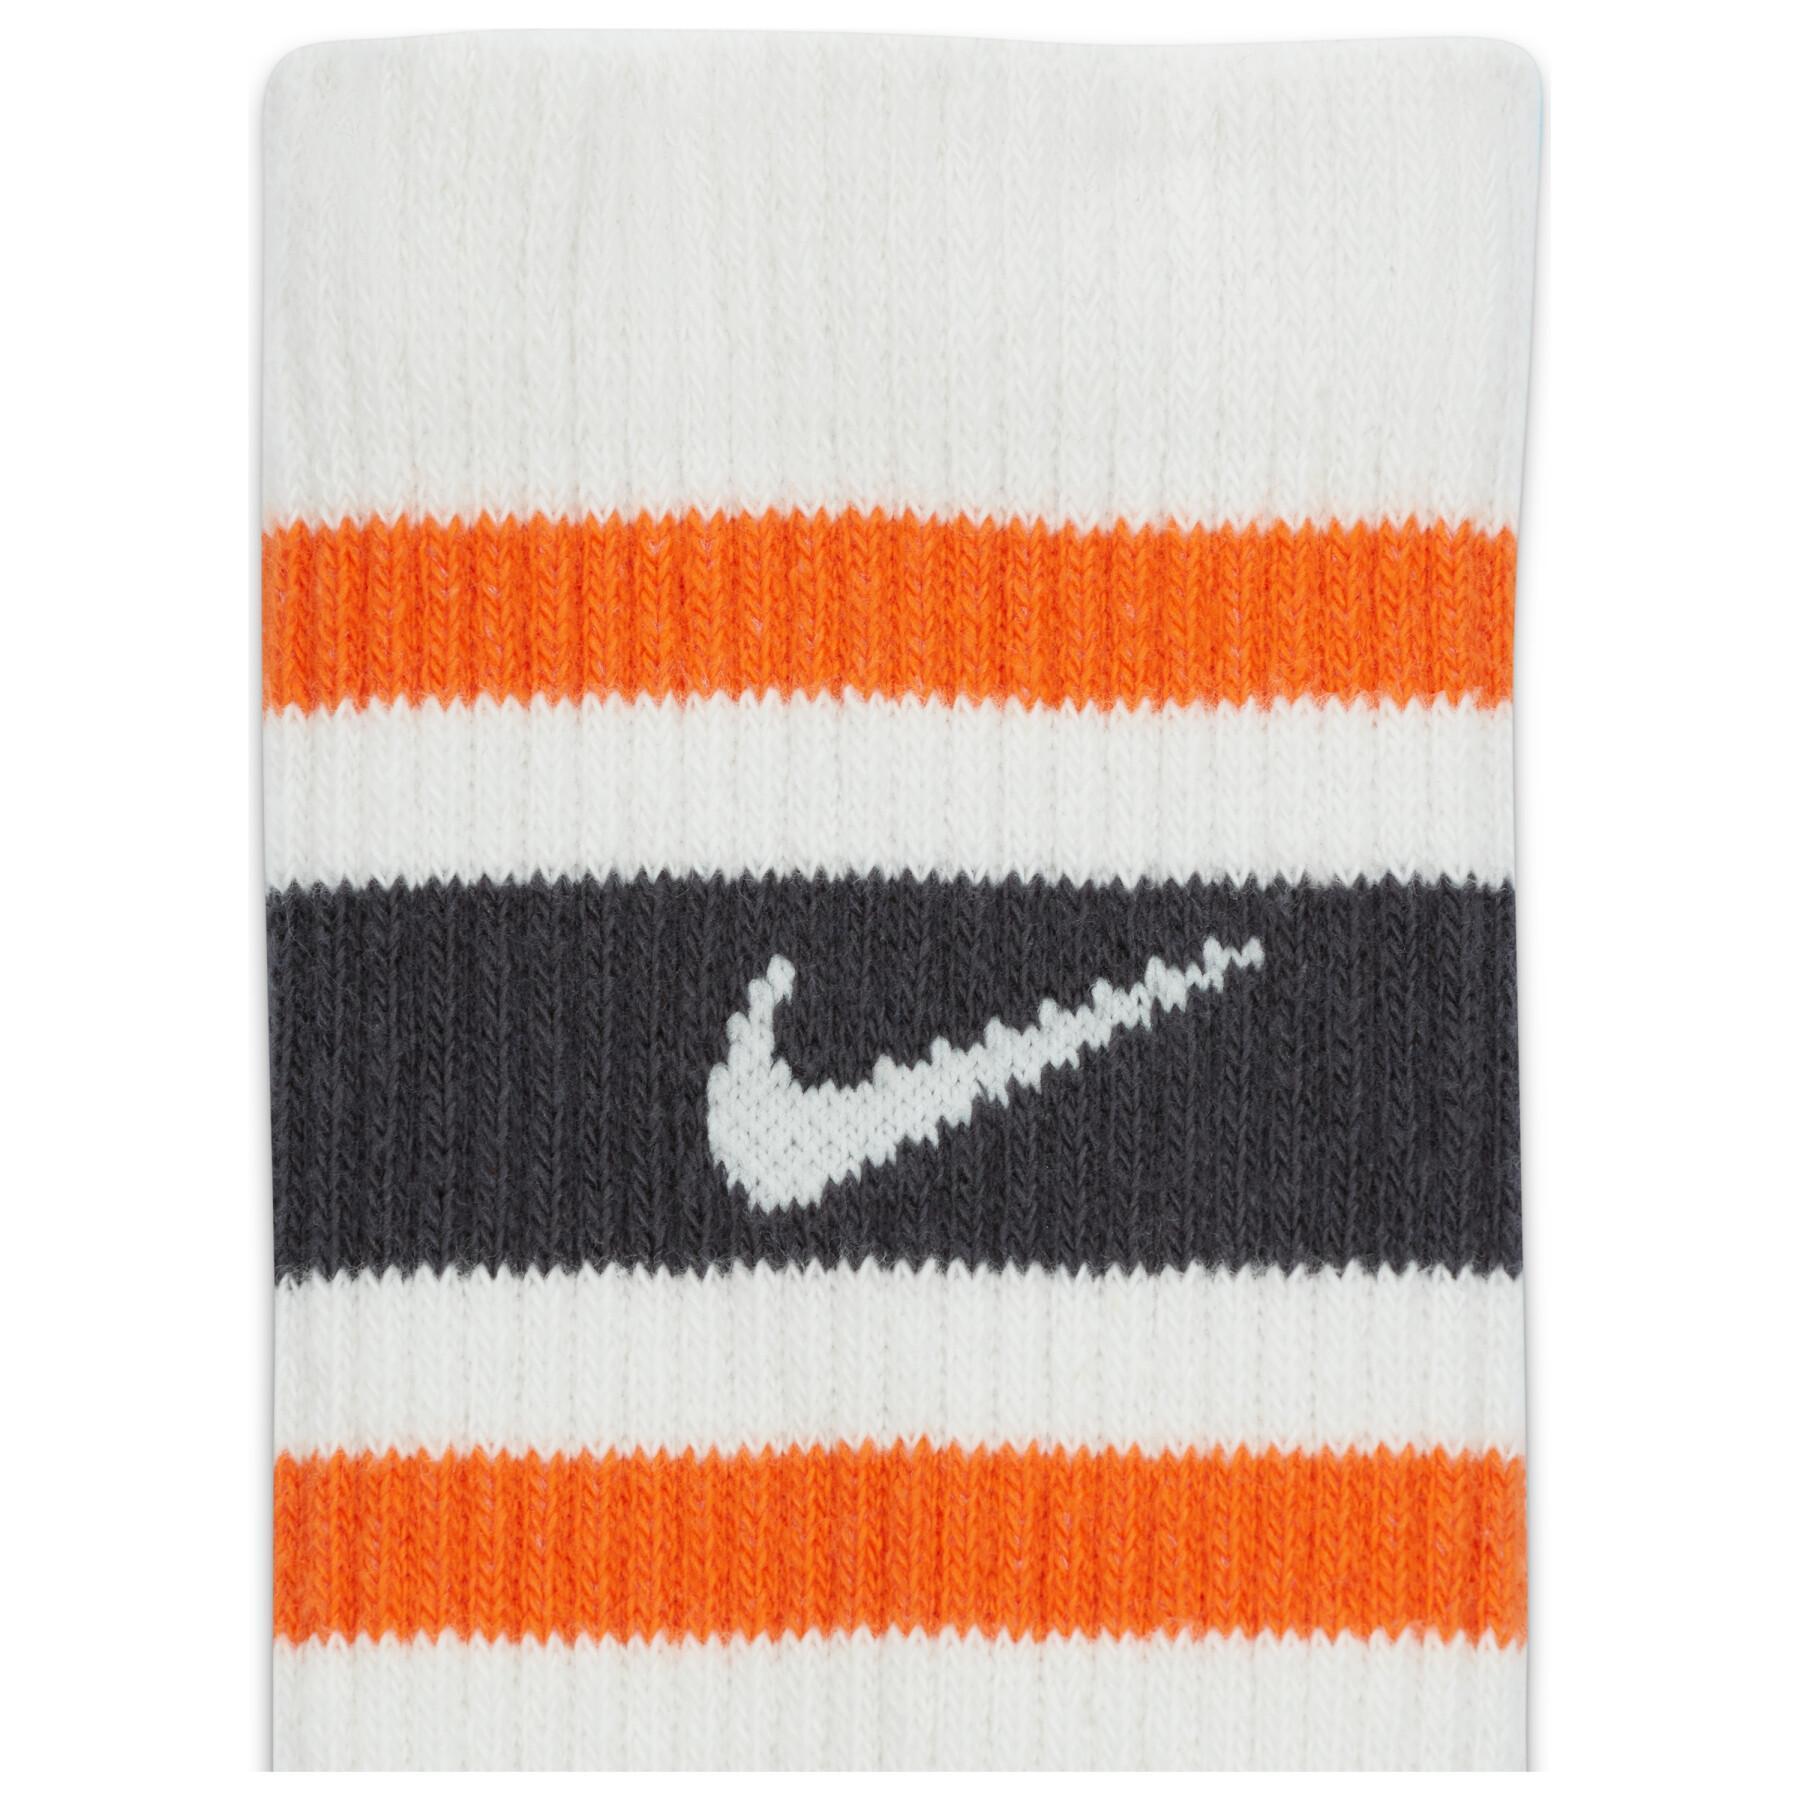 Socks Nike Everyday Plus